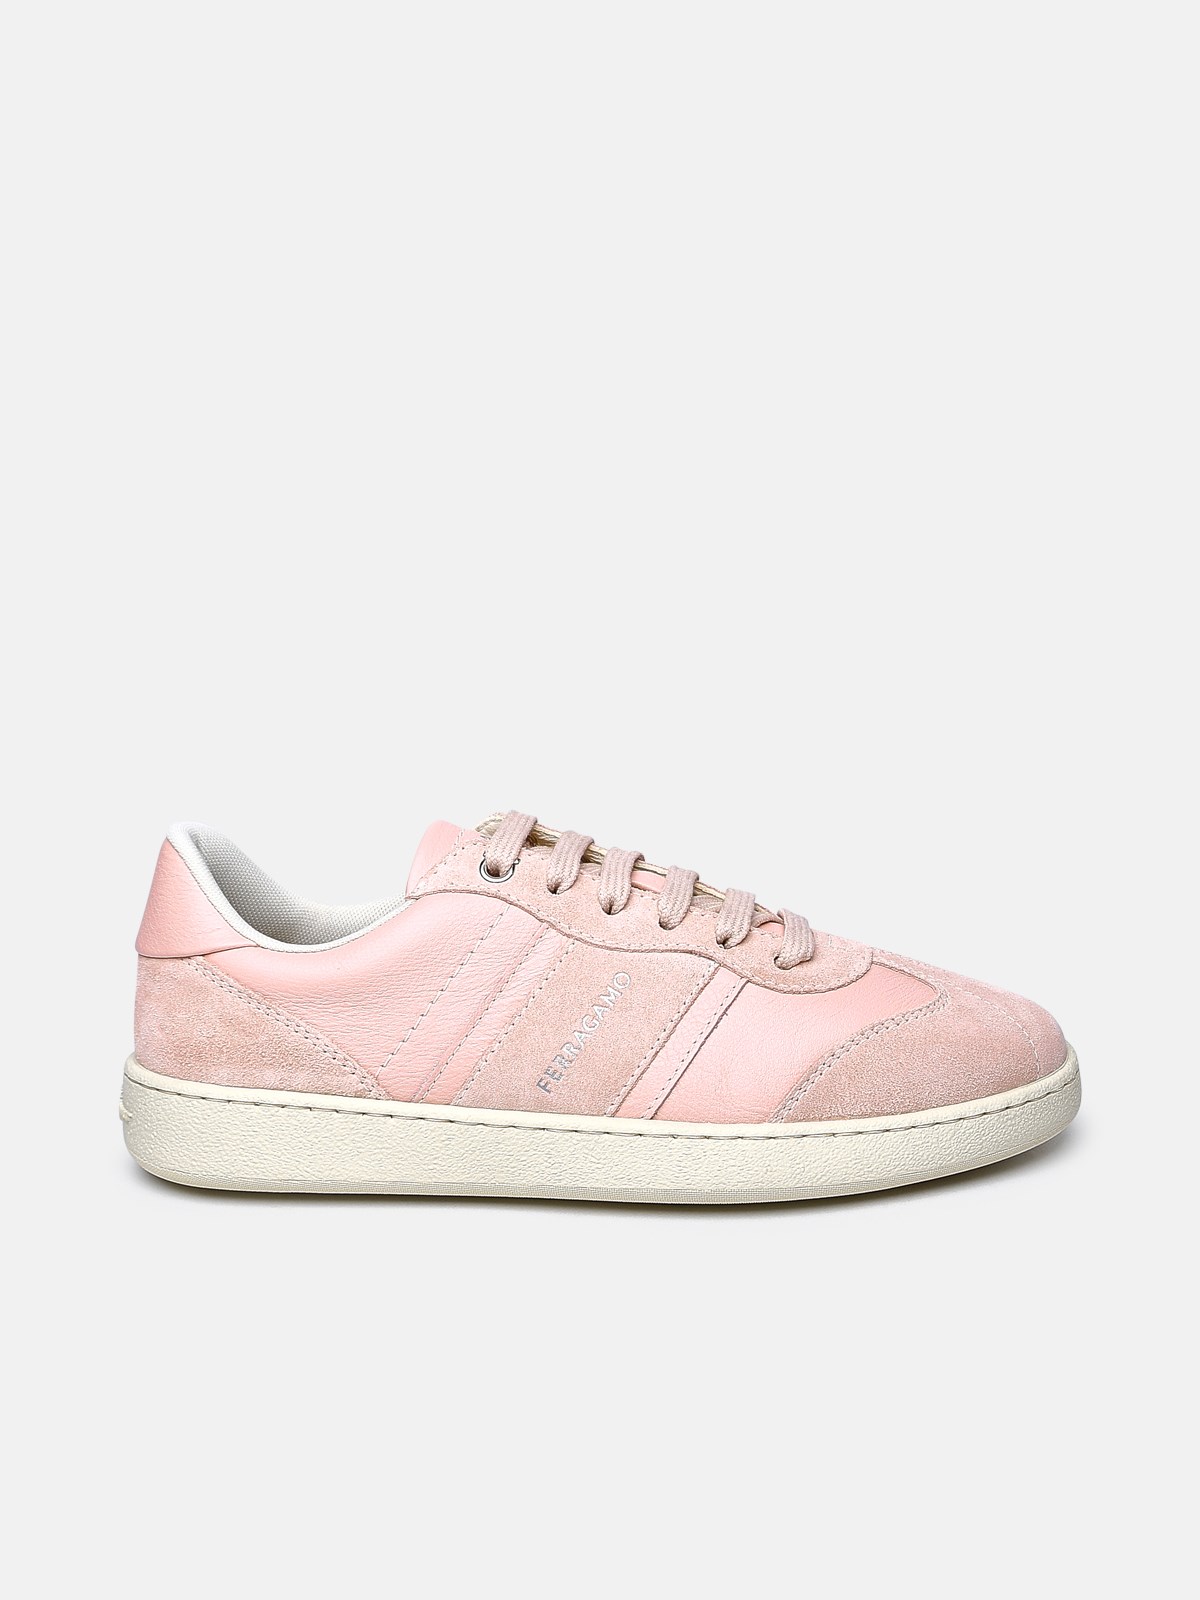 Ferragamo Pink Leather Sneakers